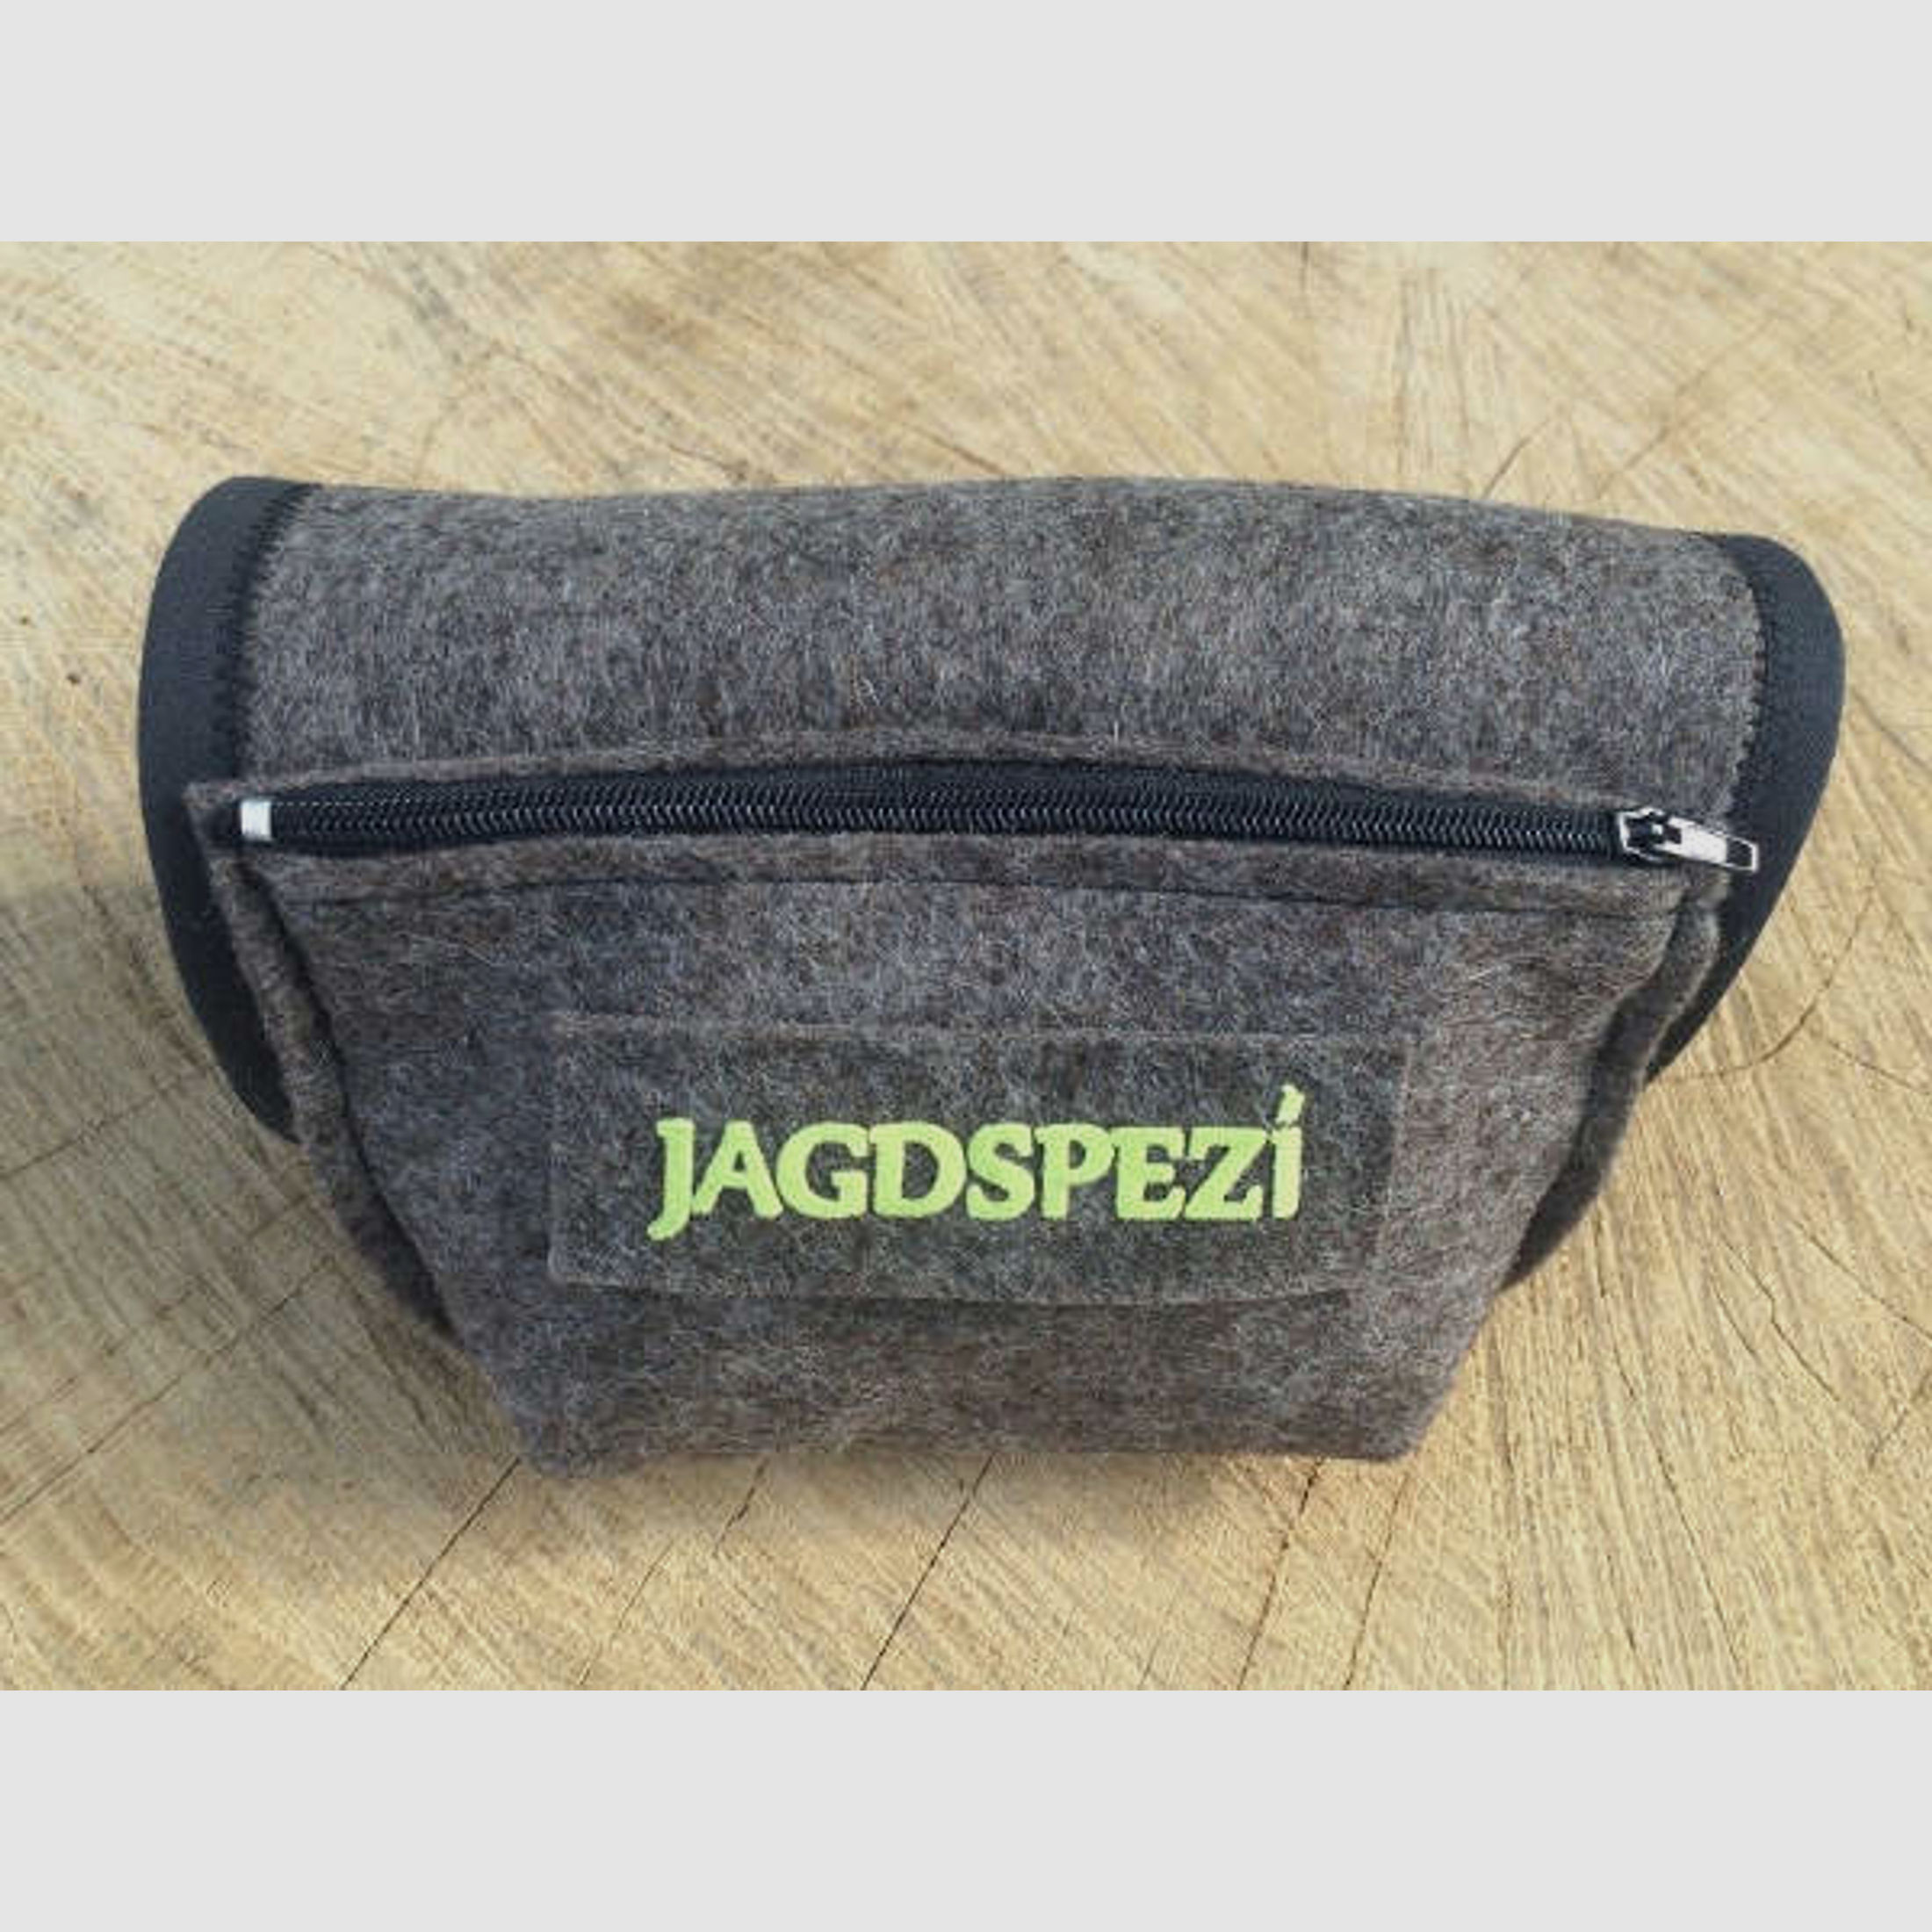 Die JAGDSPEZI-Schafttasche (Variante: Linksschaft)